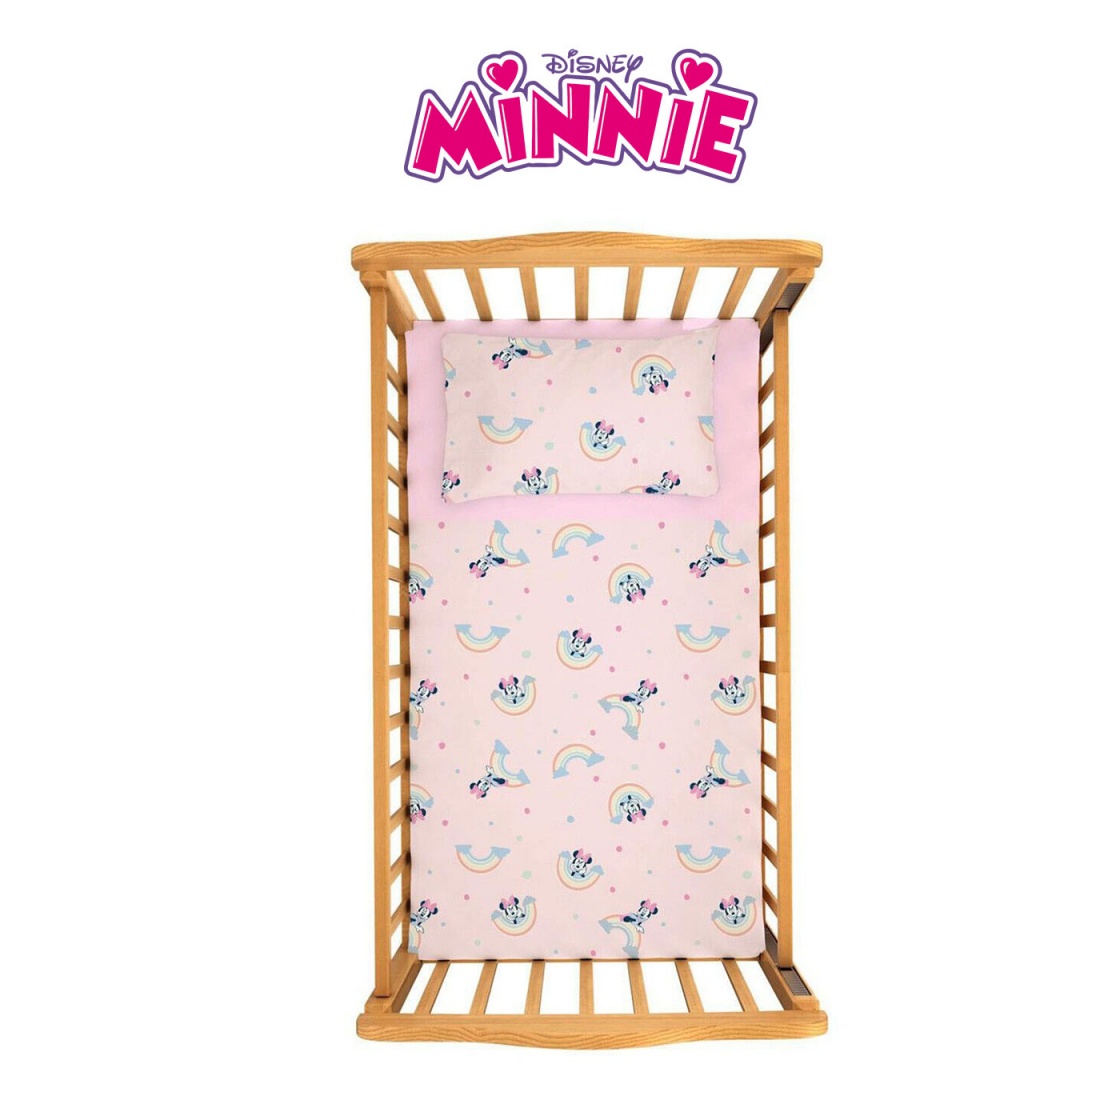 Completo lenzuola Minnie Disney per Lettino baby